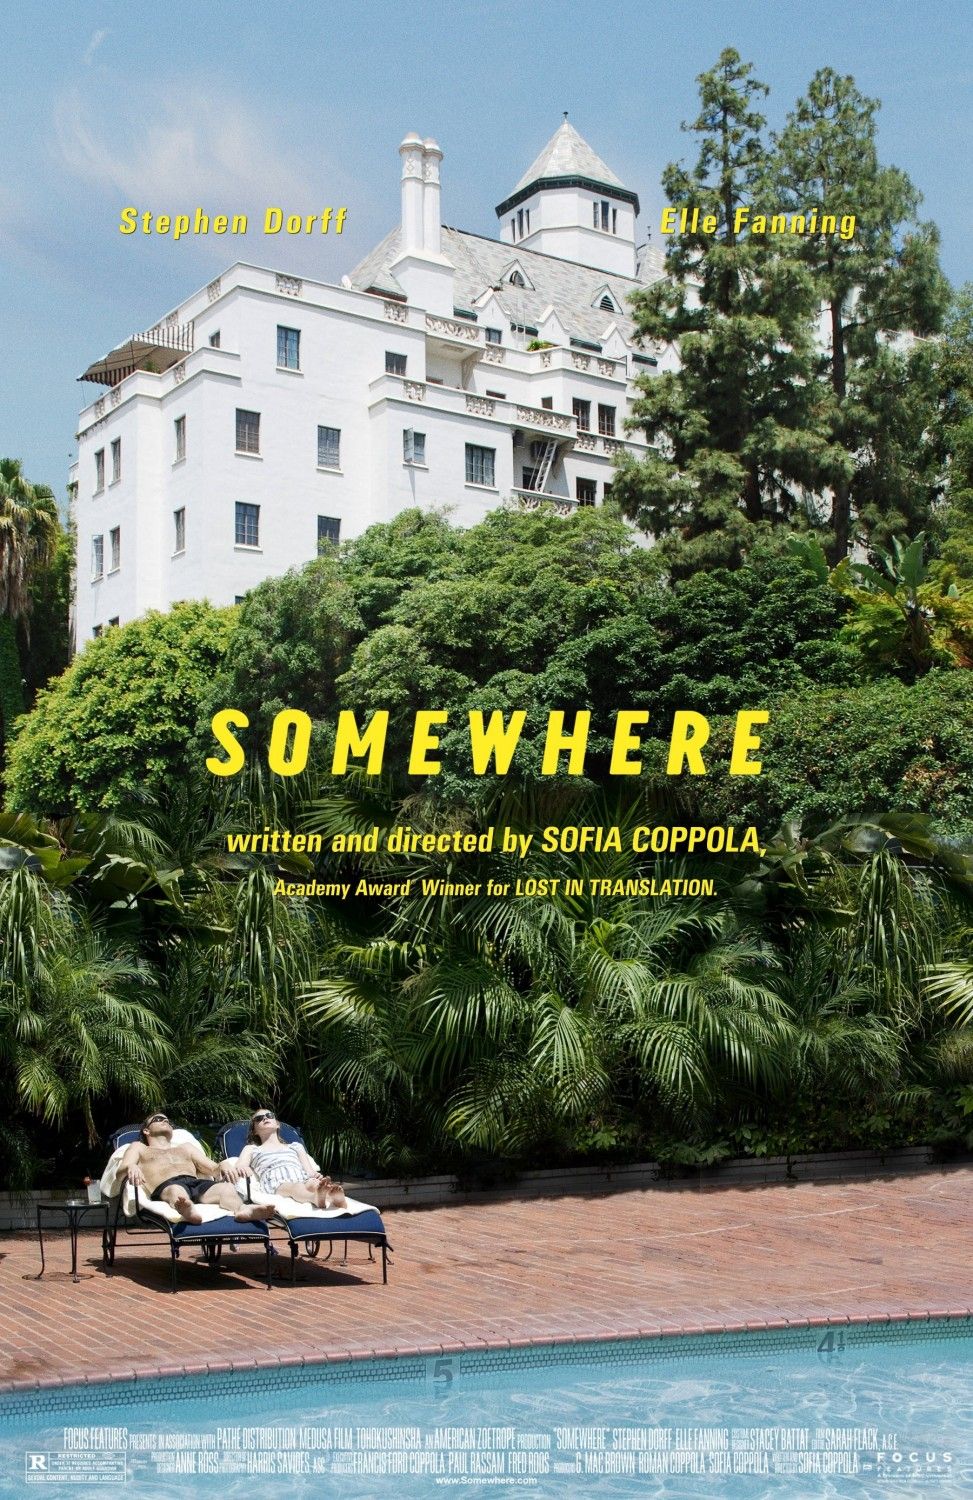 Will “Somewhere” Take You Anywhere?